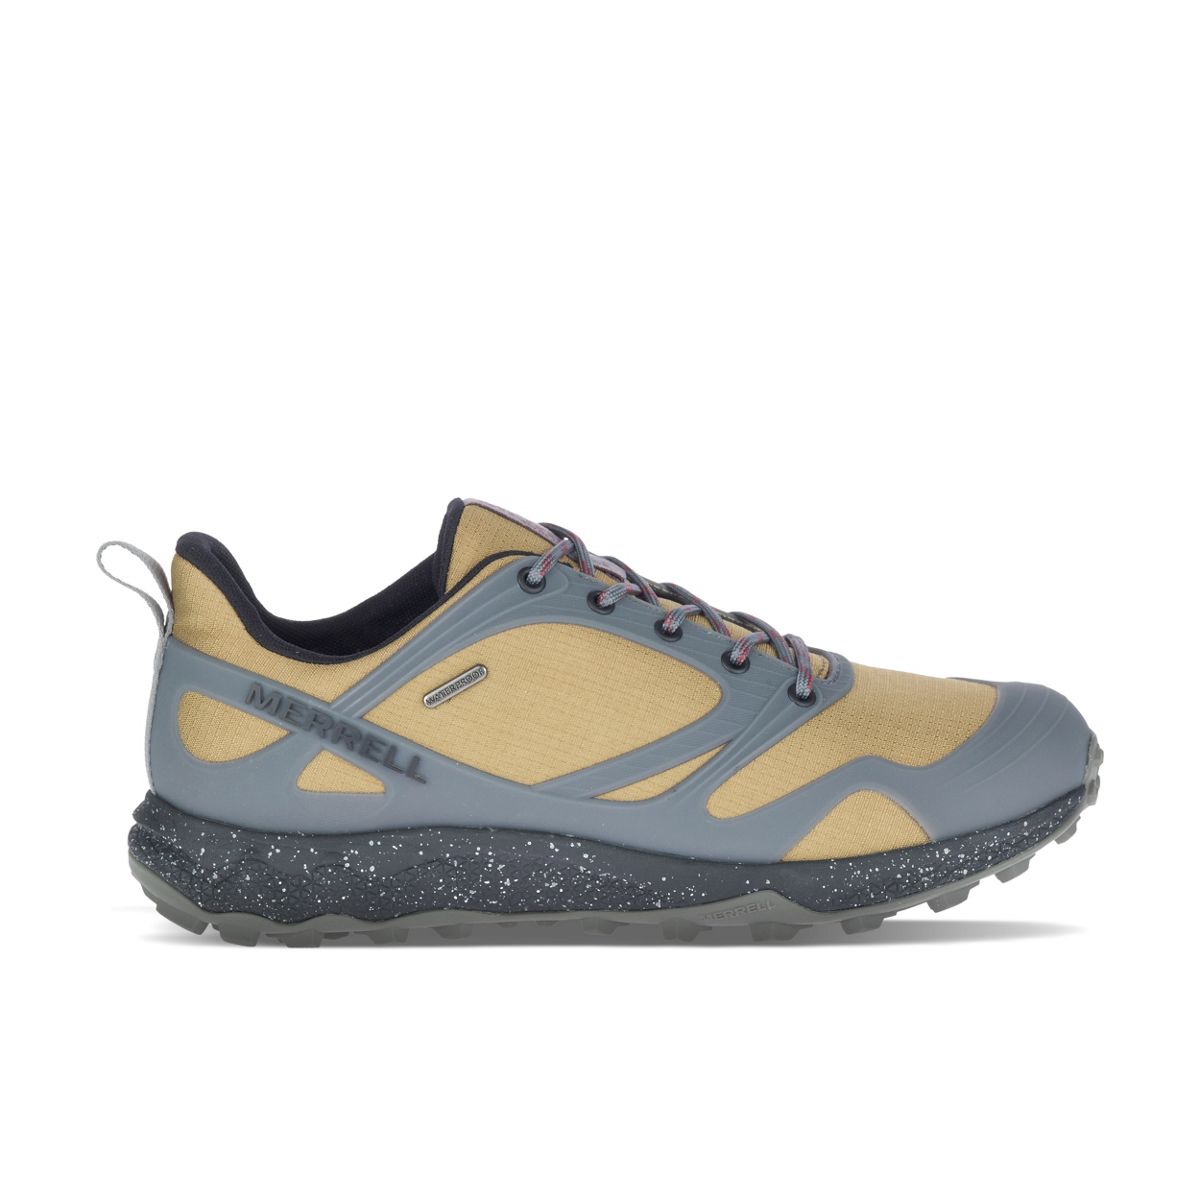 Altalight Waterproof Hiking Shoes | Merrell